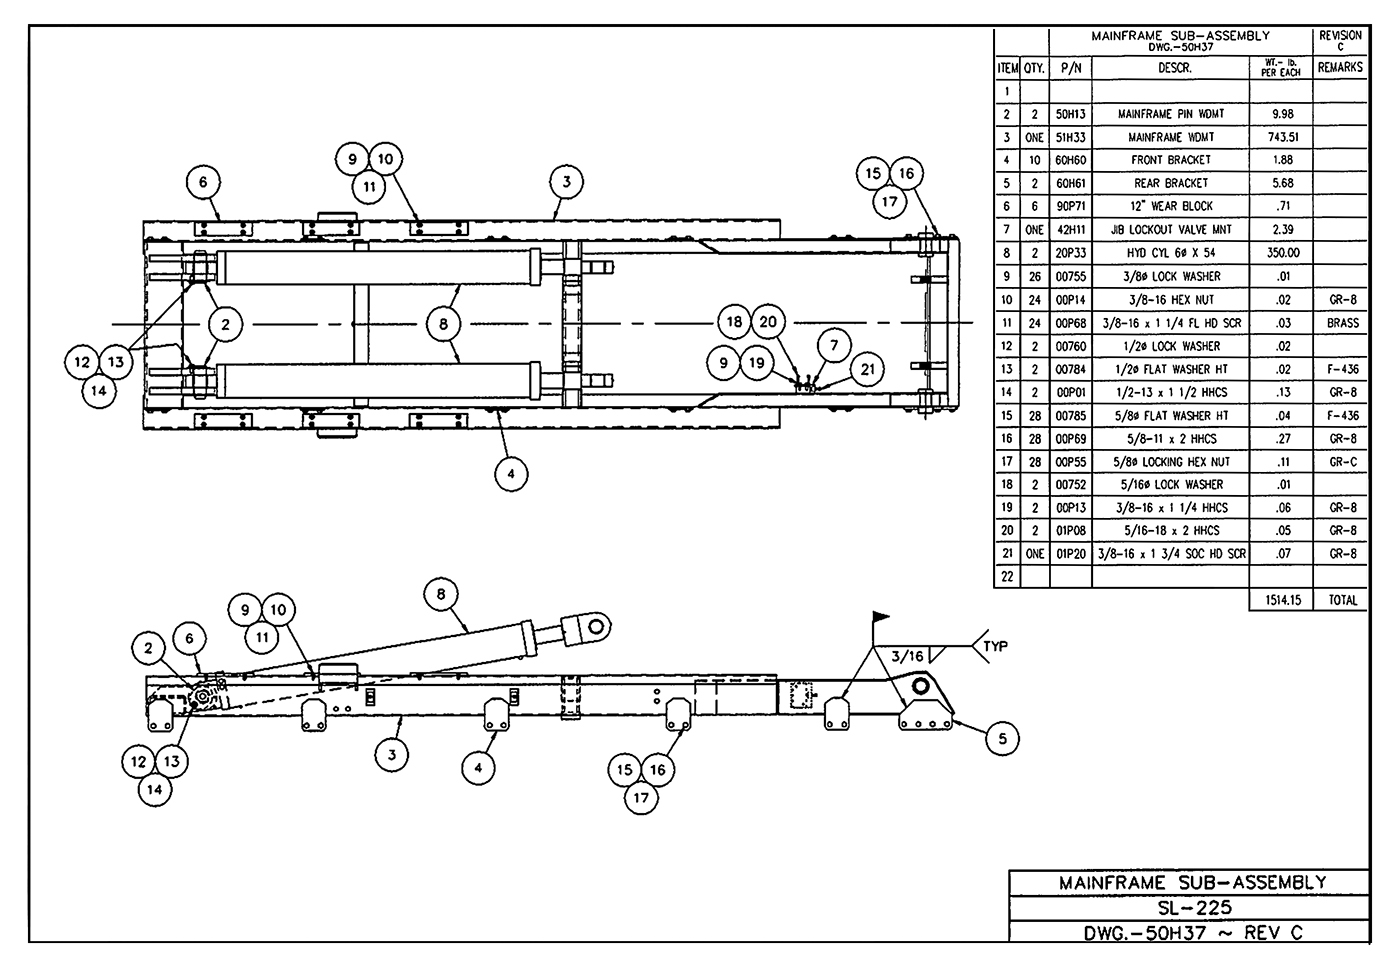 SL-225 Mainframe Sub-Assembly Diagram